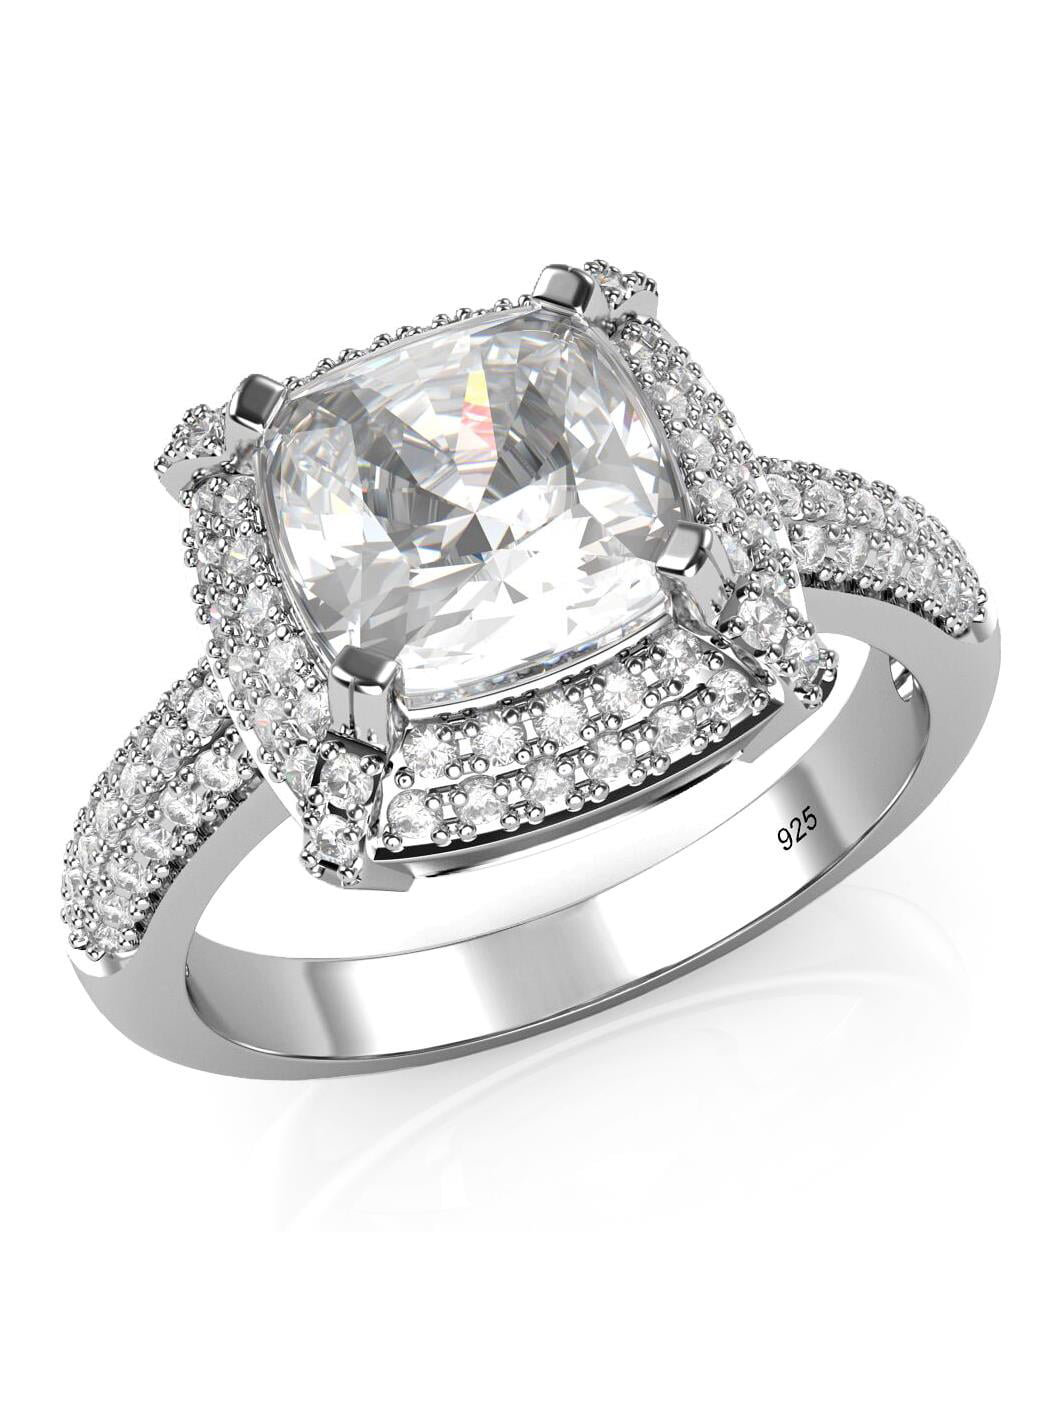 Sterling Silver Princess Cut CZ Engagement Wedding Ring Set Cubic Zirconia FY012 